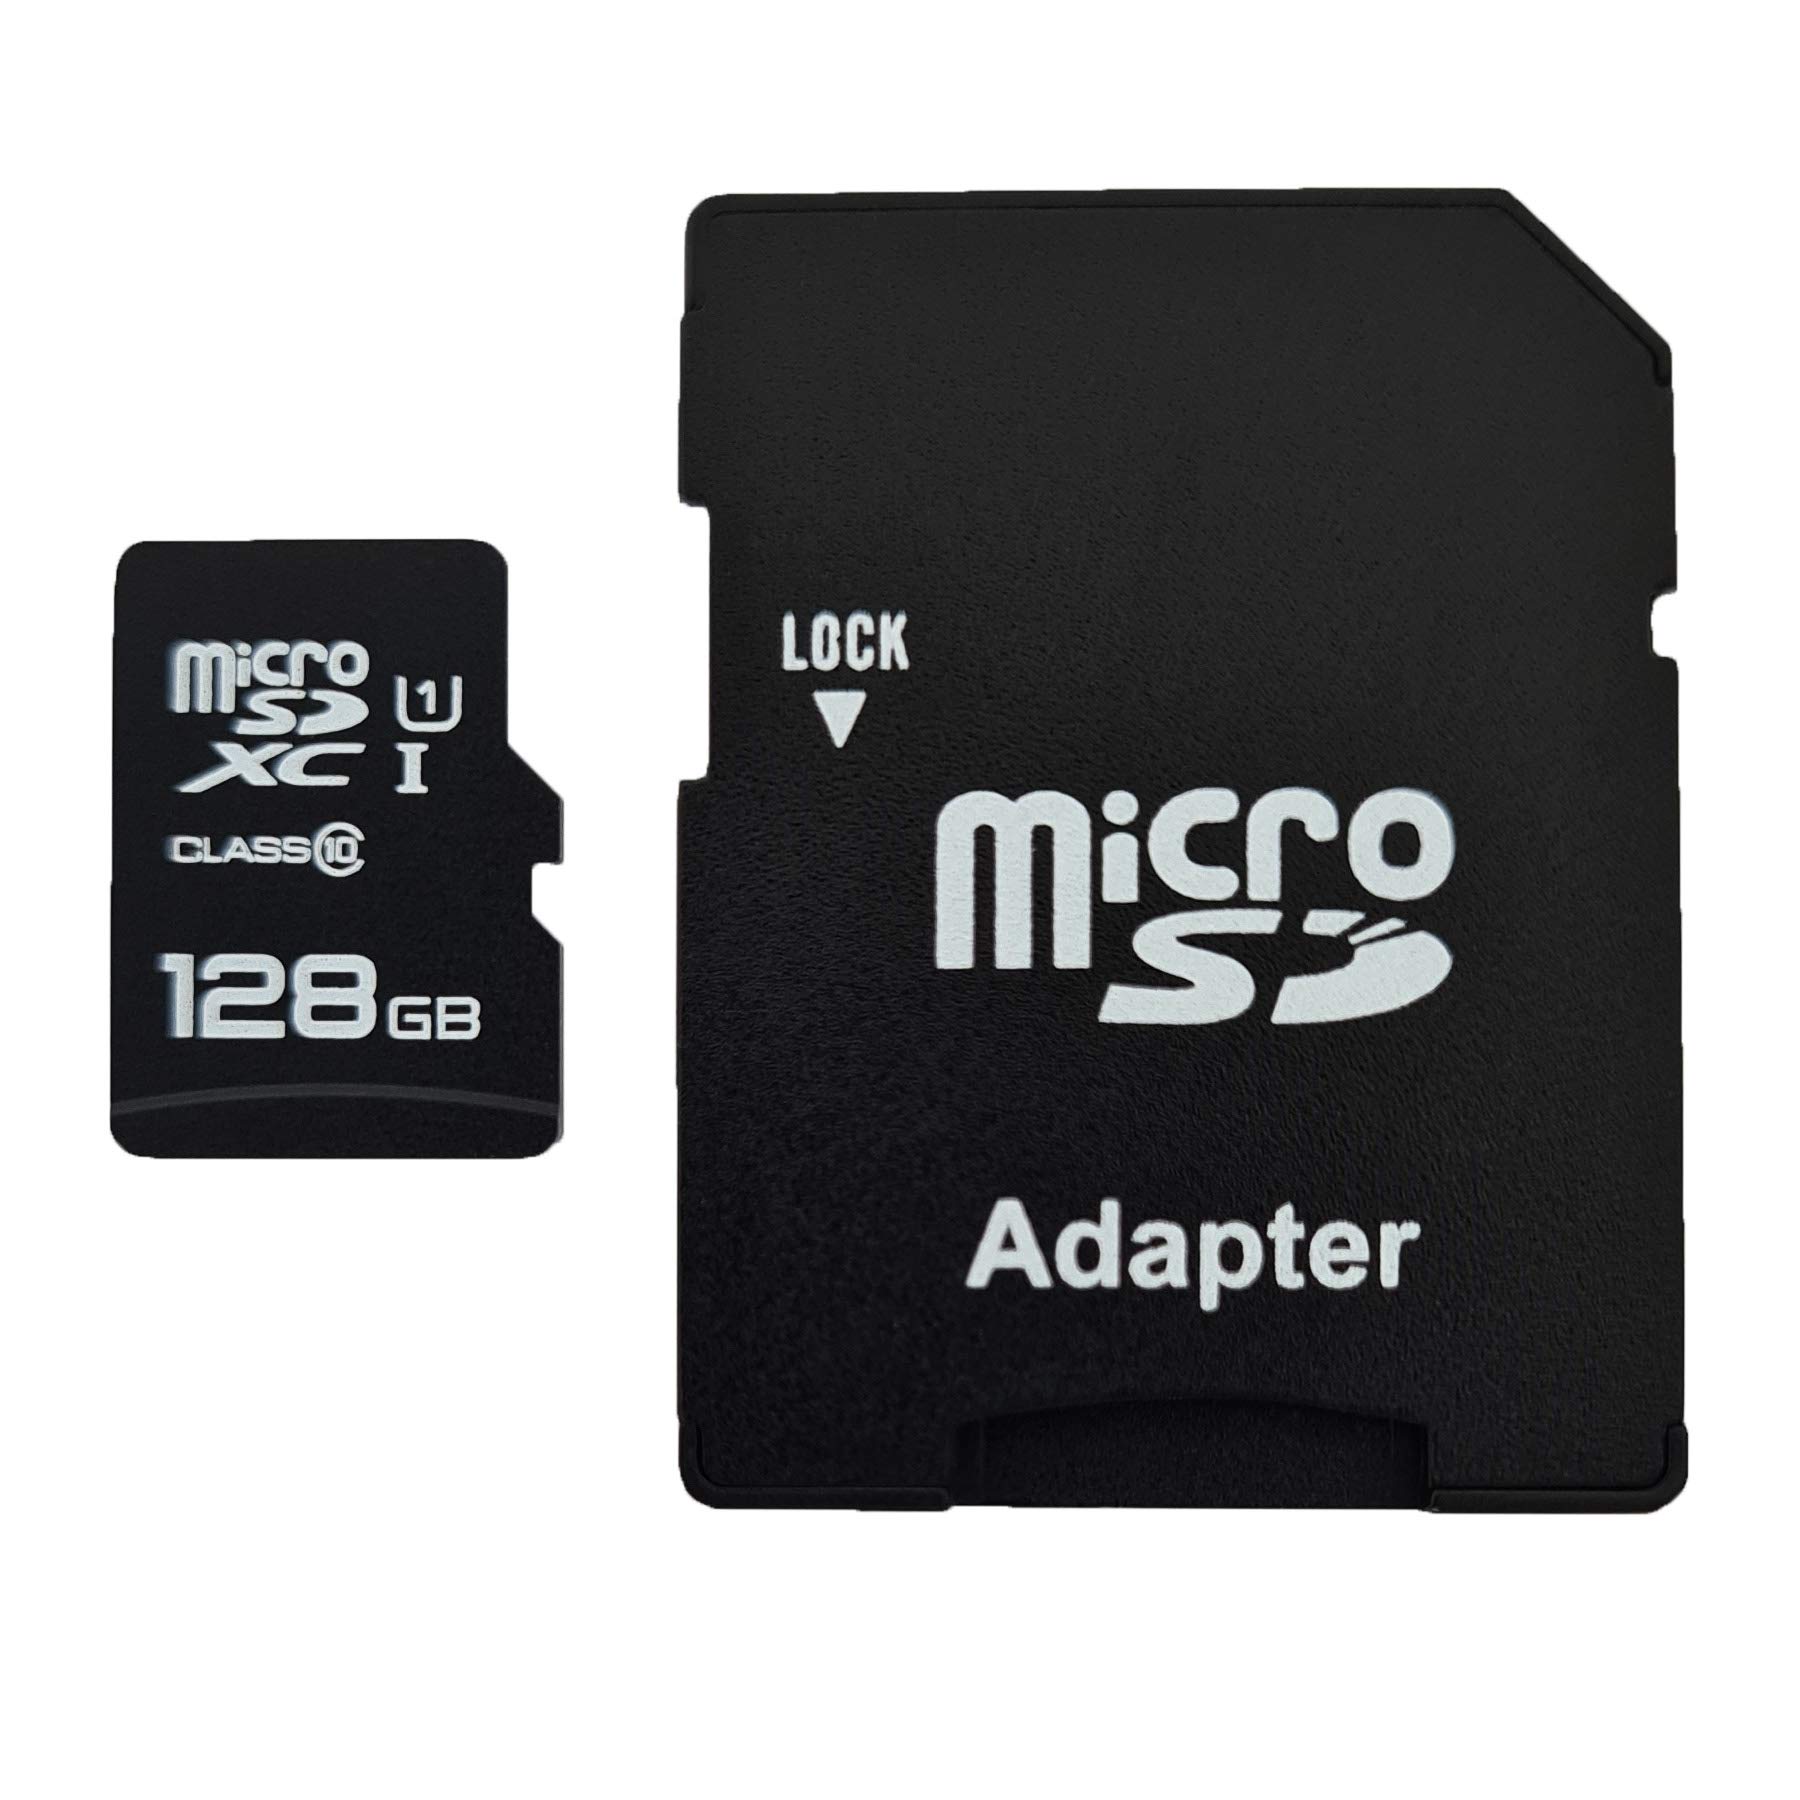 dekoelektropunktde 128GB MicroSDXC Speicherkarte mit Adapter Class 10 kompatibel für Samsung Galaxy S III i9300